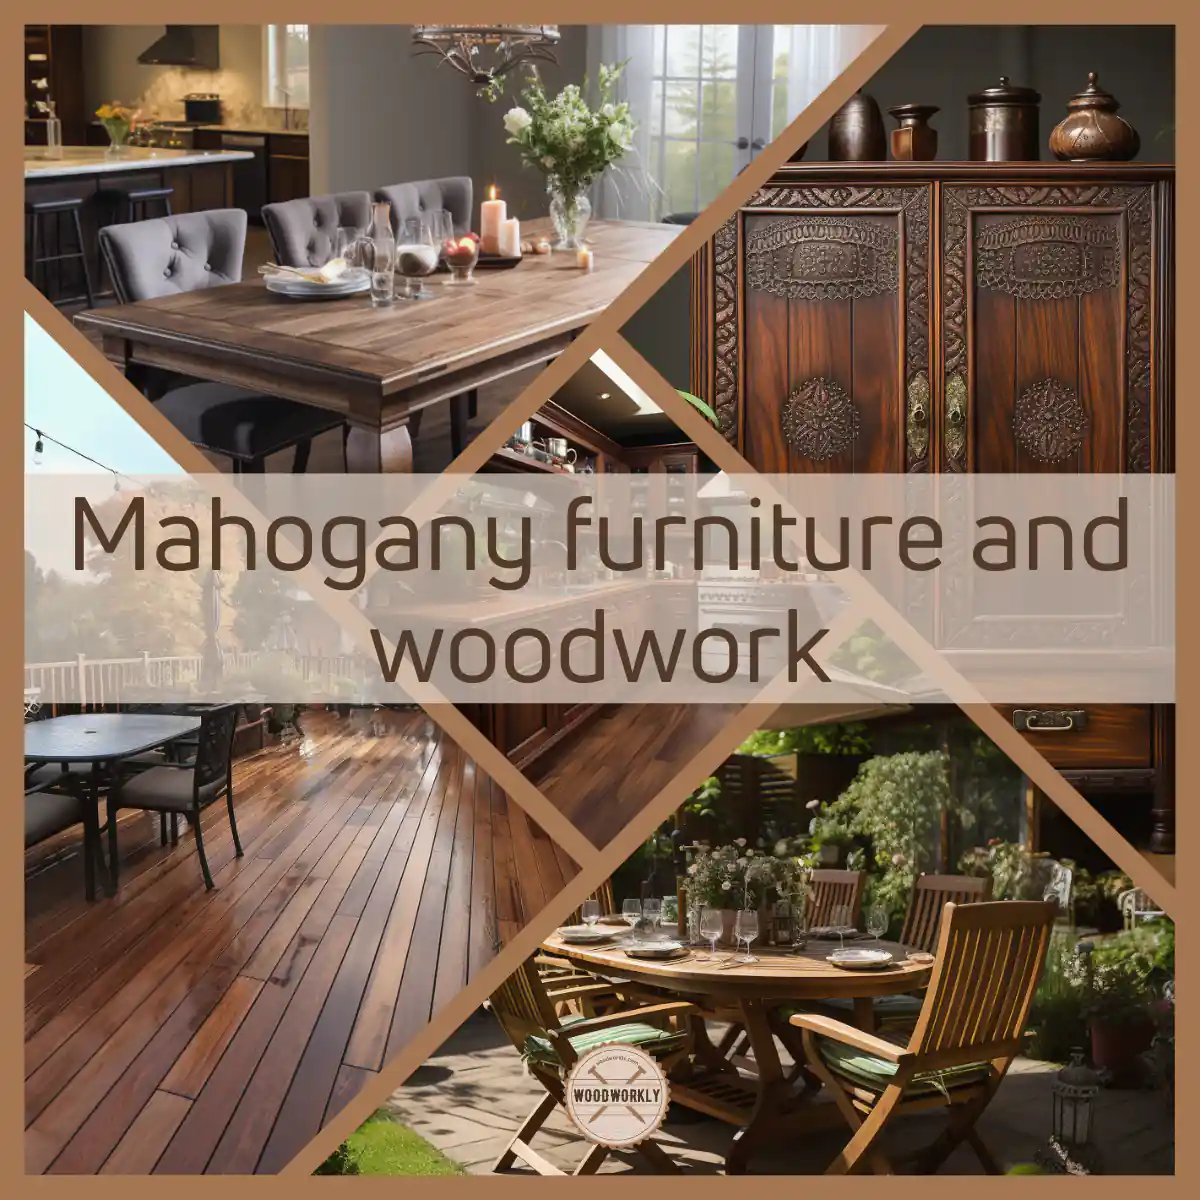 Mahogany furniture and woodwork